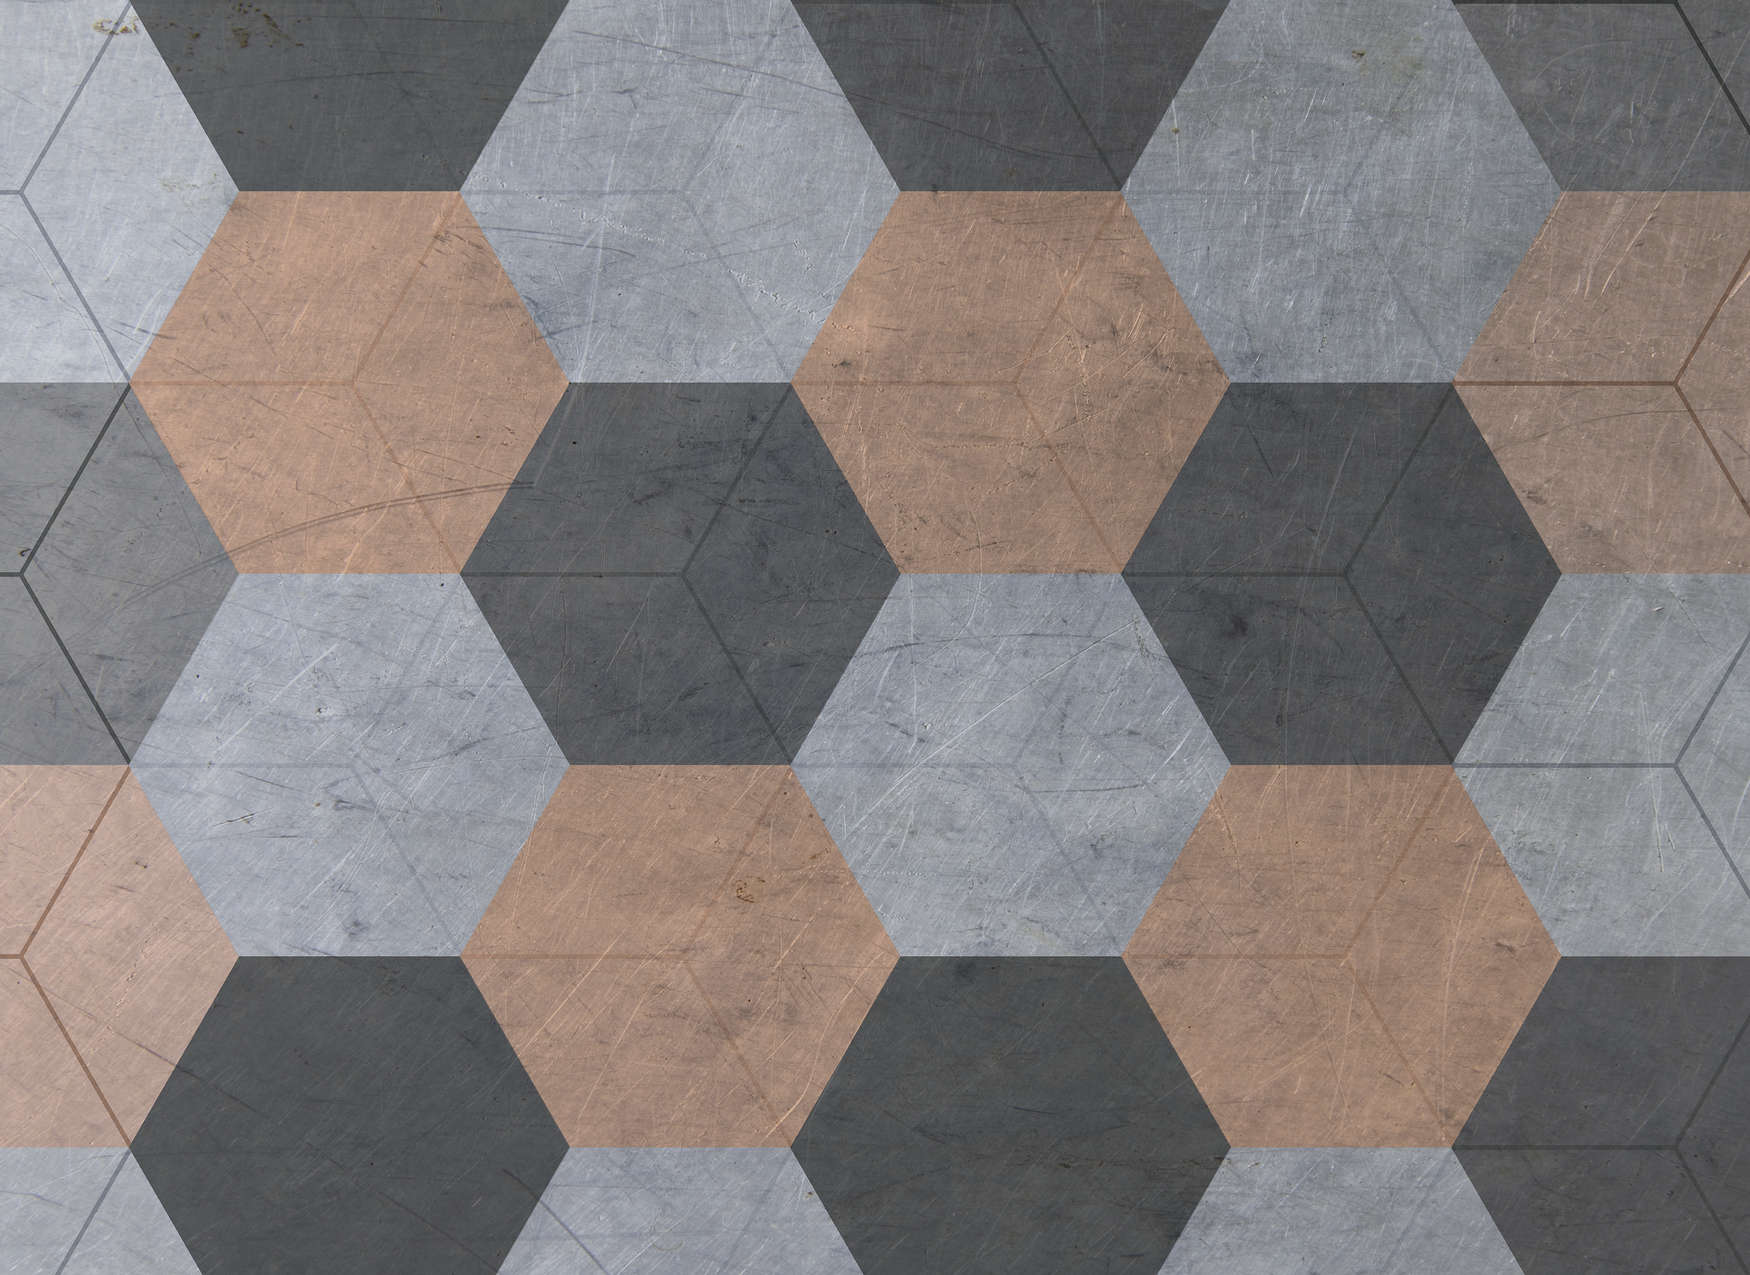             Vintage Hexagon Tile Wallpaper - Black, Grey, Orange
        